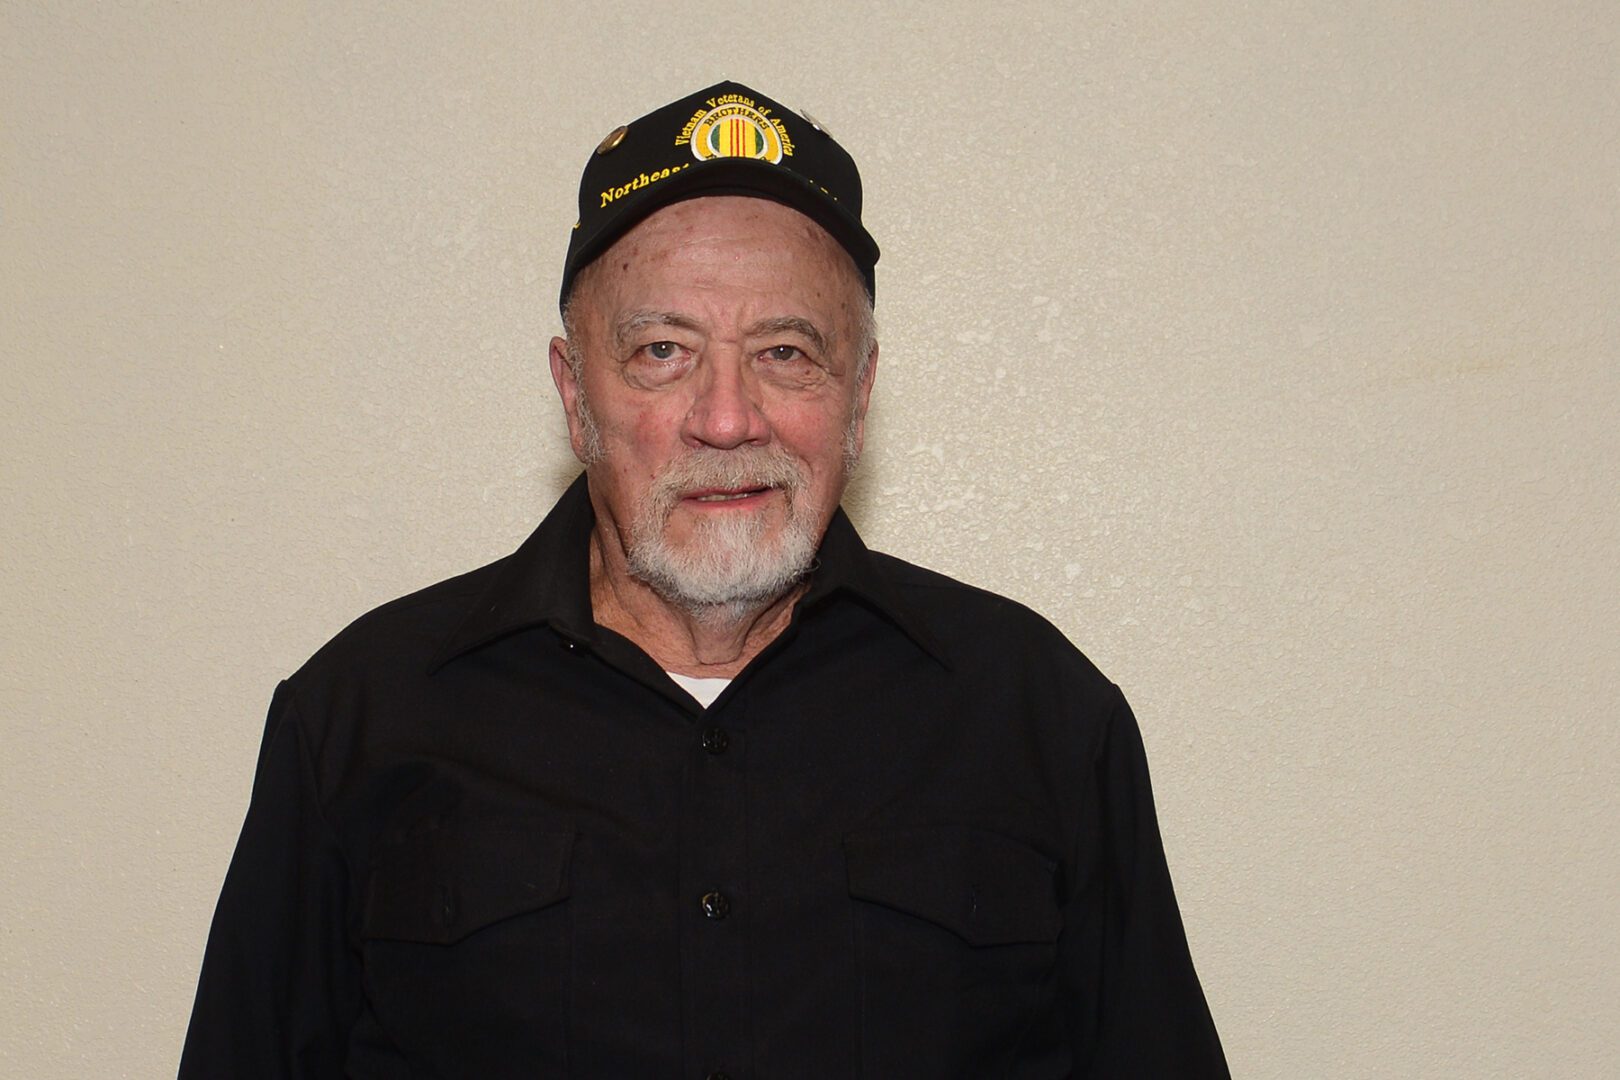 A man in black shirt wearing a hat.